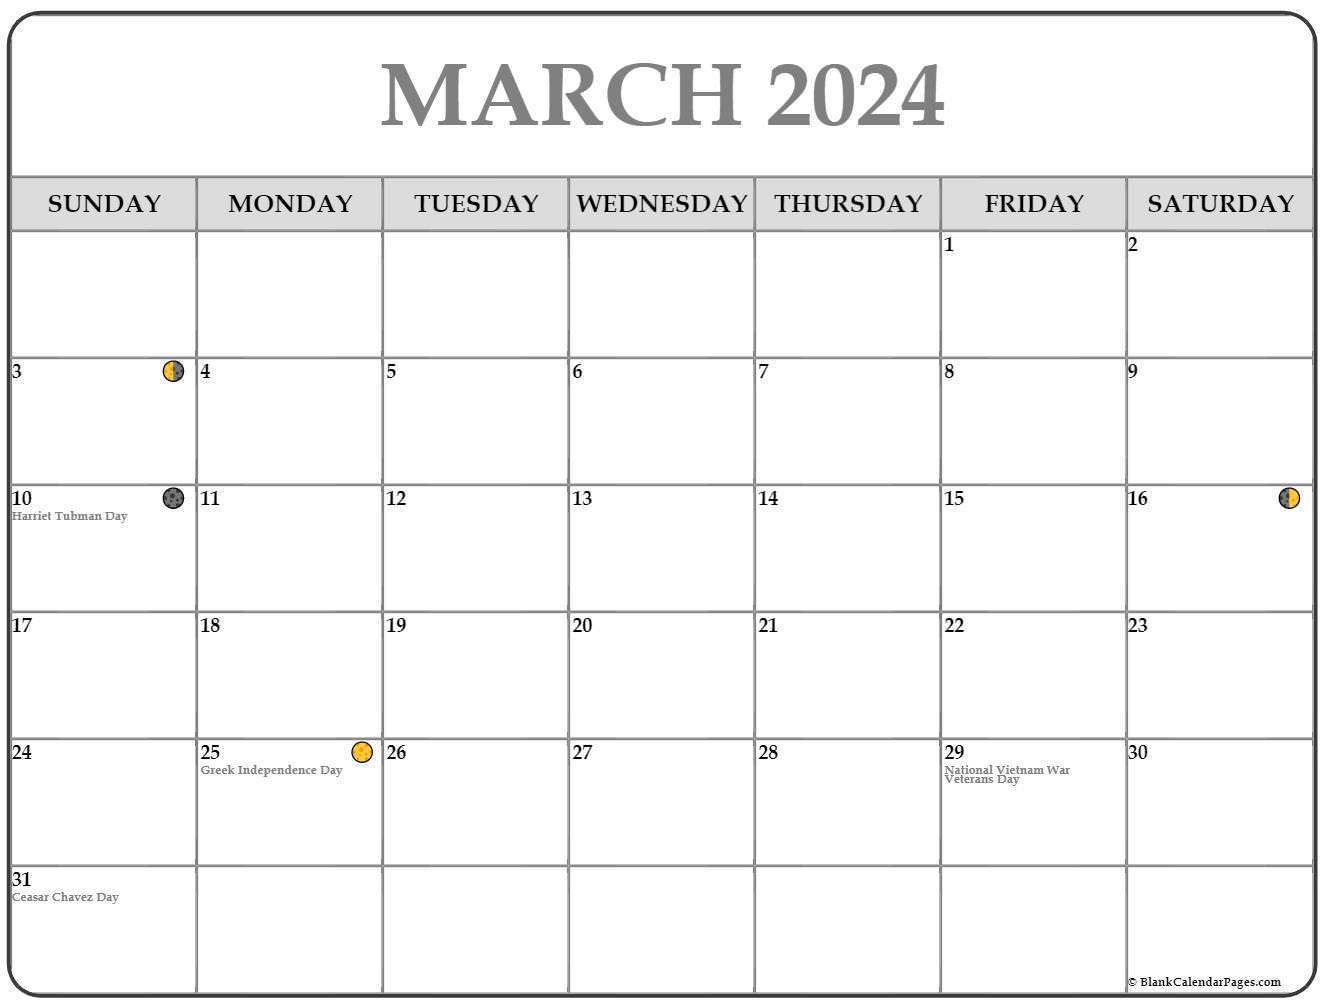 March Moon Calendar 2022 March 2022 Lunar Calendar | Moon Phase Calendar